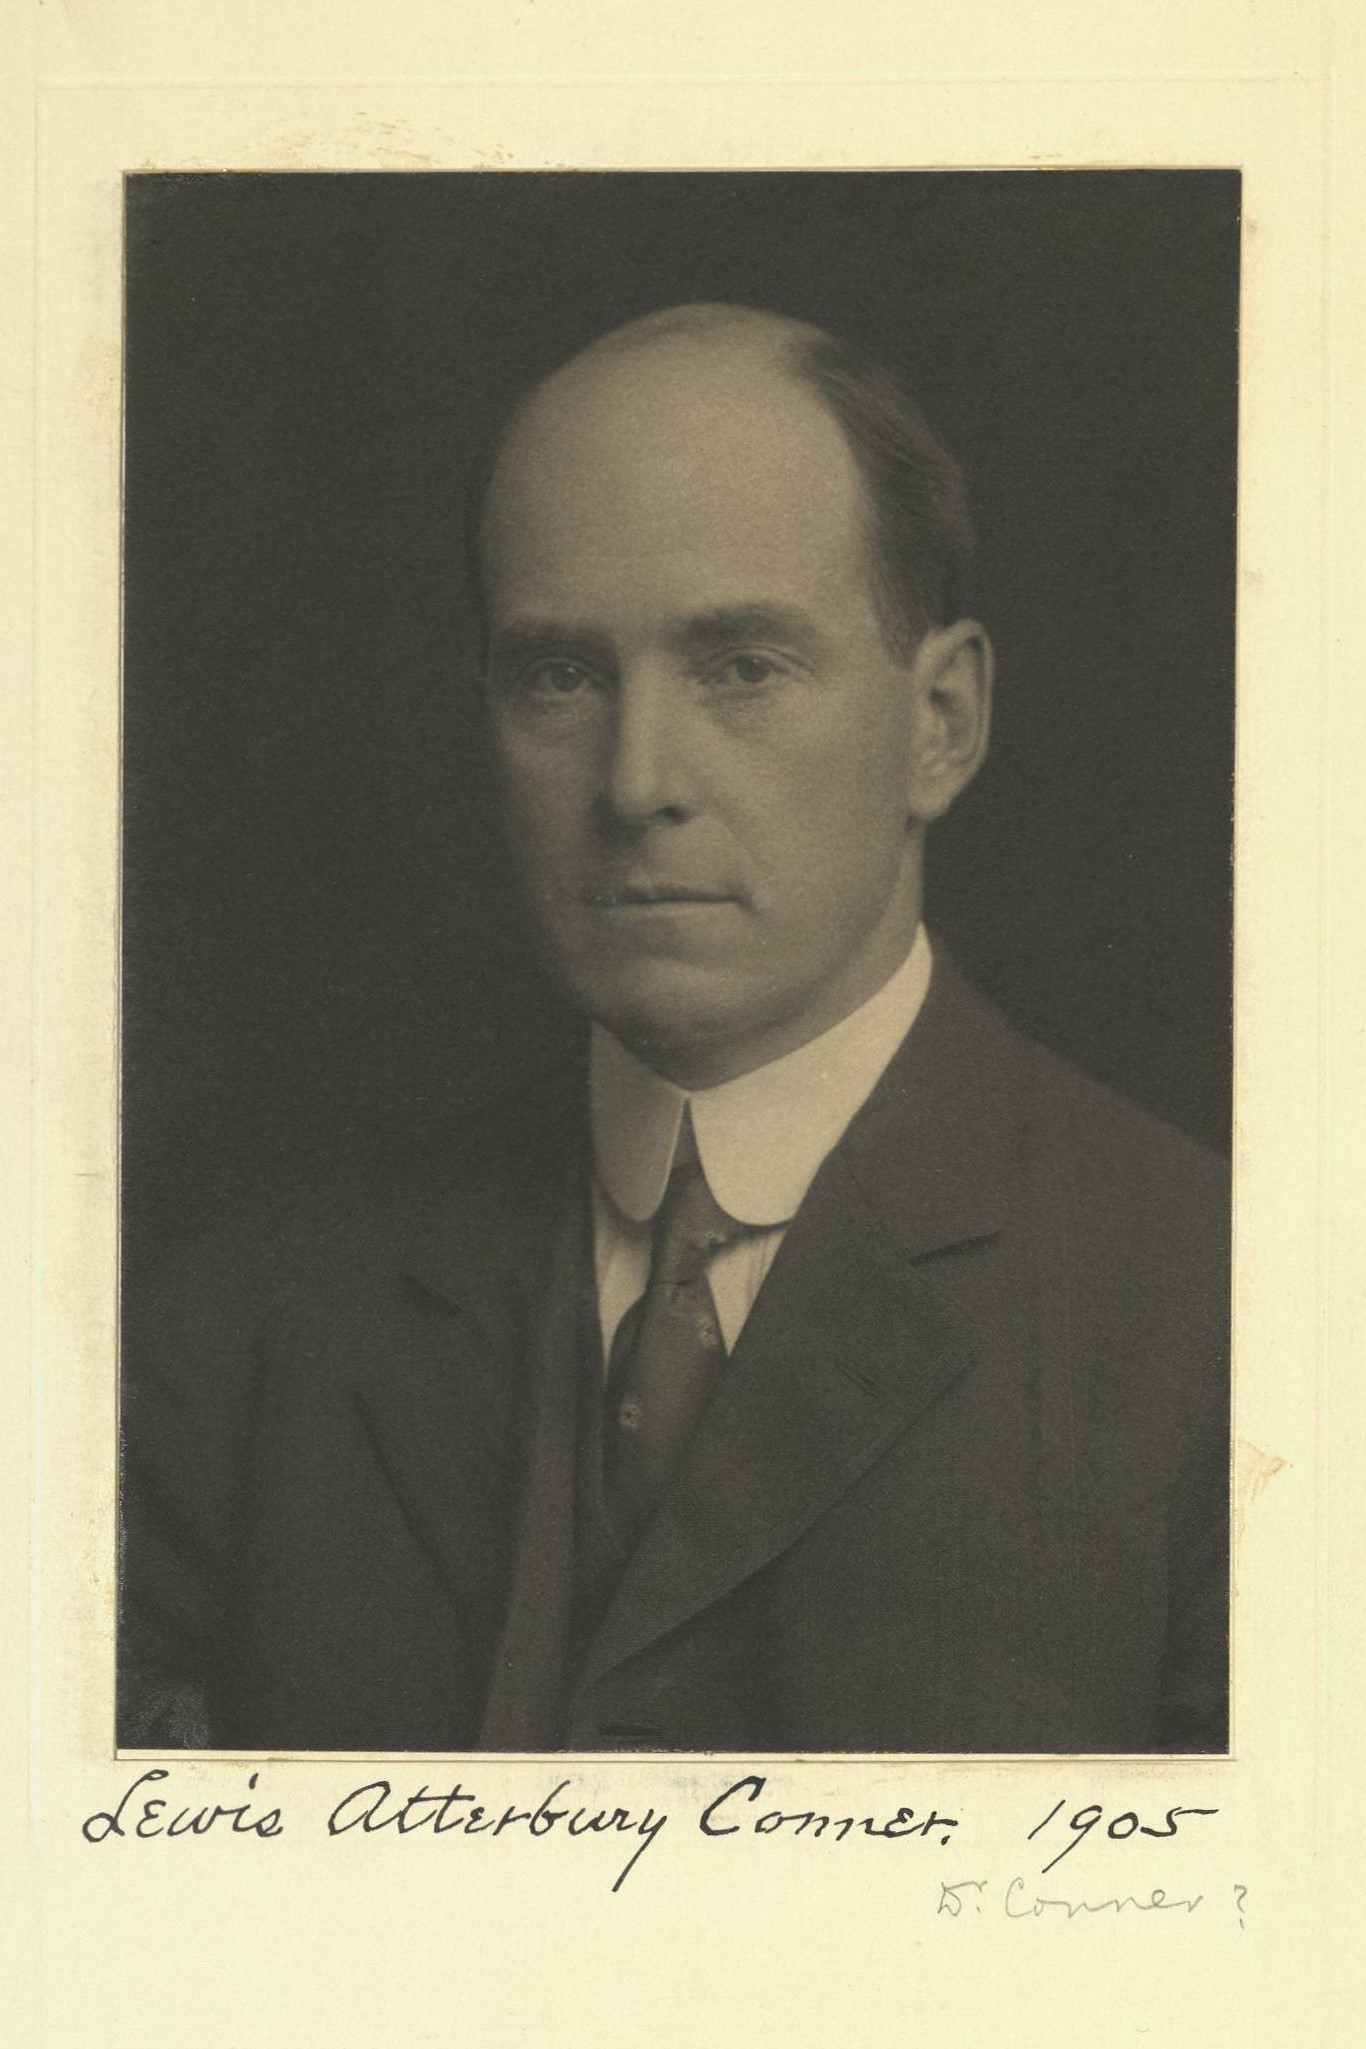 Member portrait of Lewis Atterbury Conner